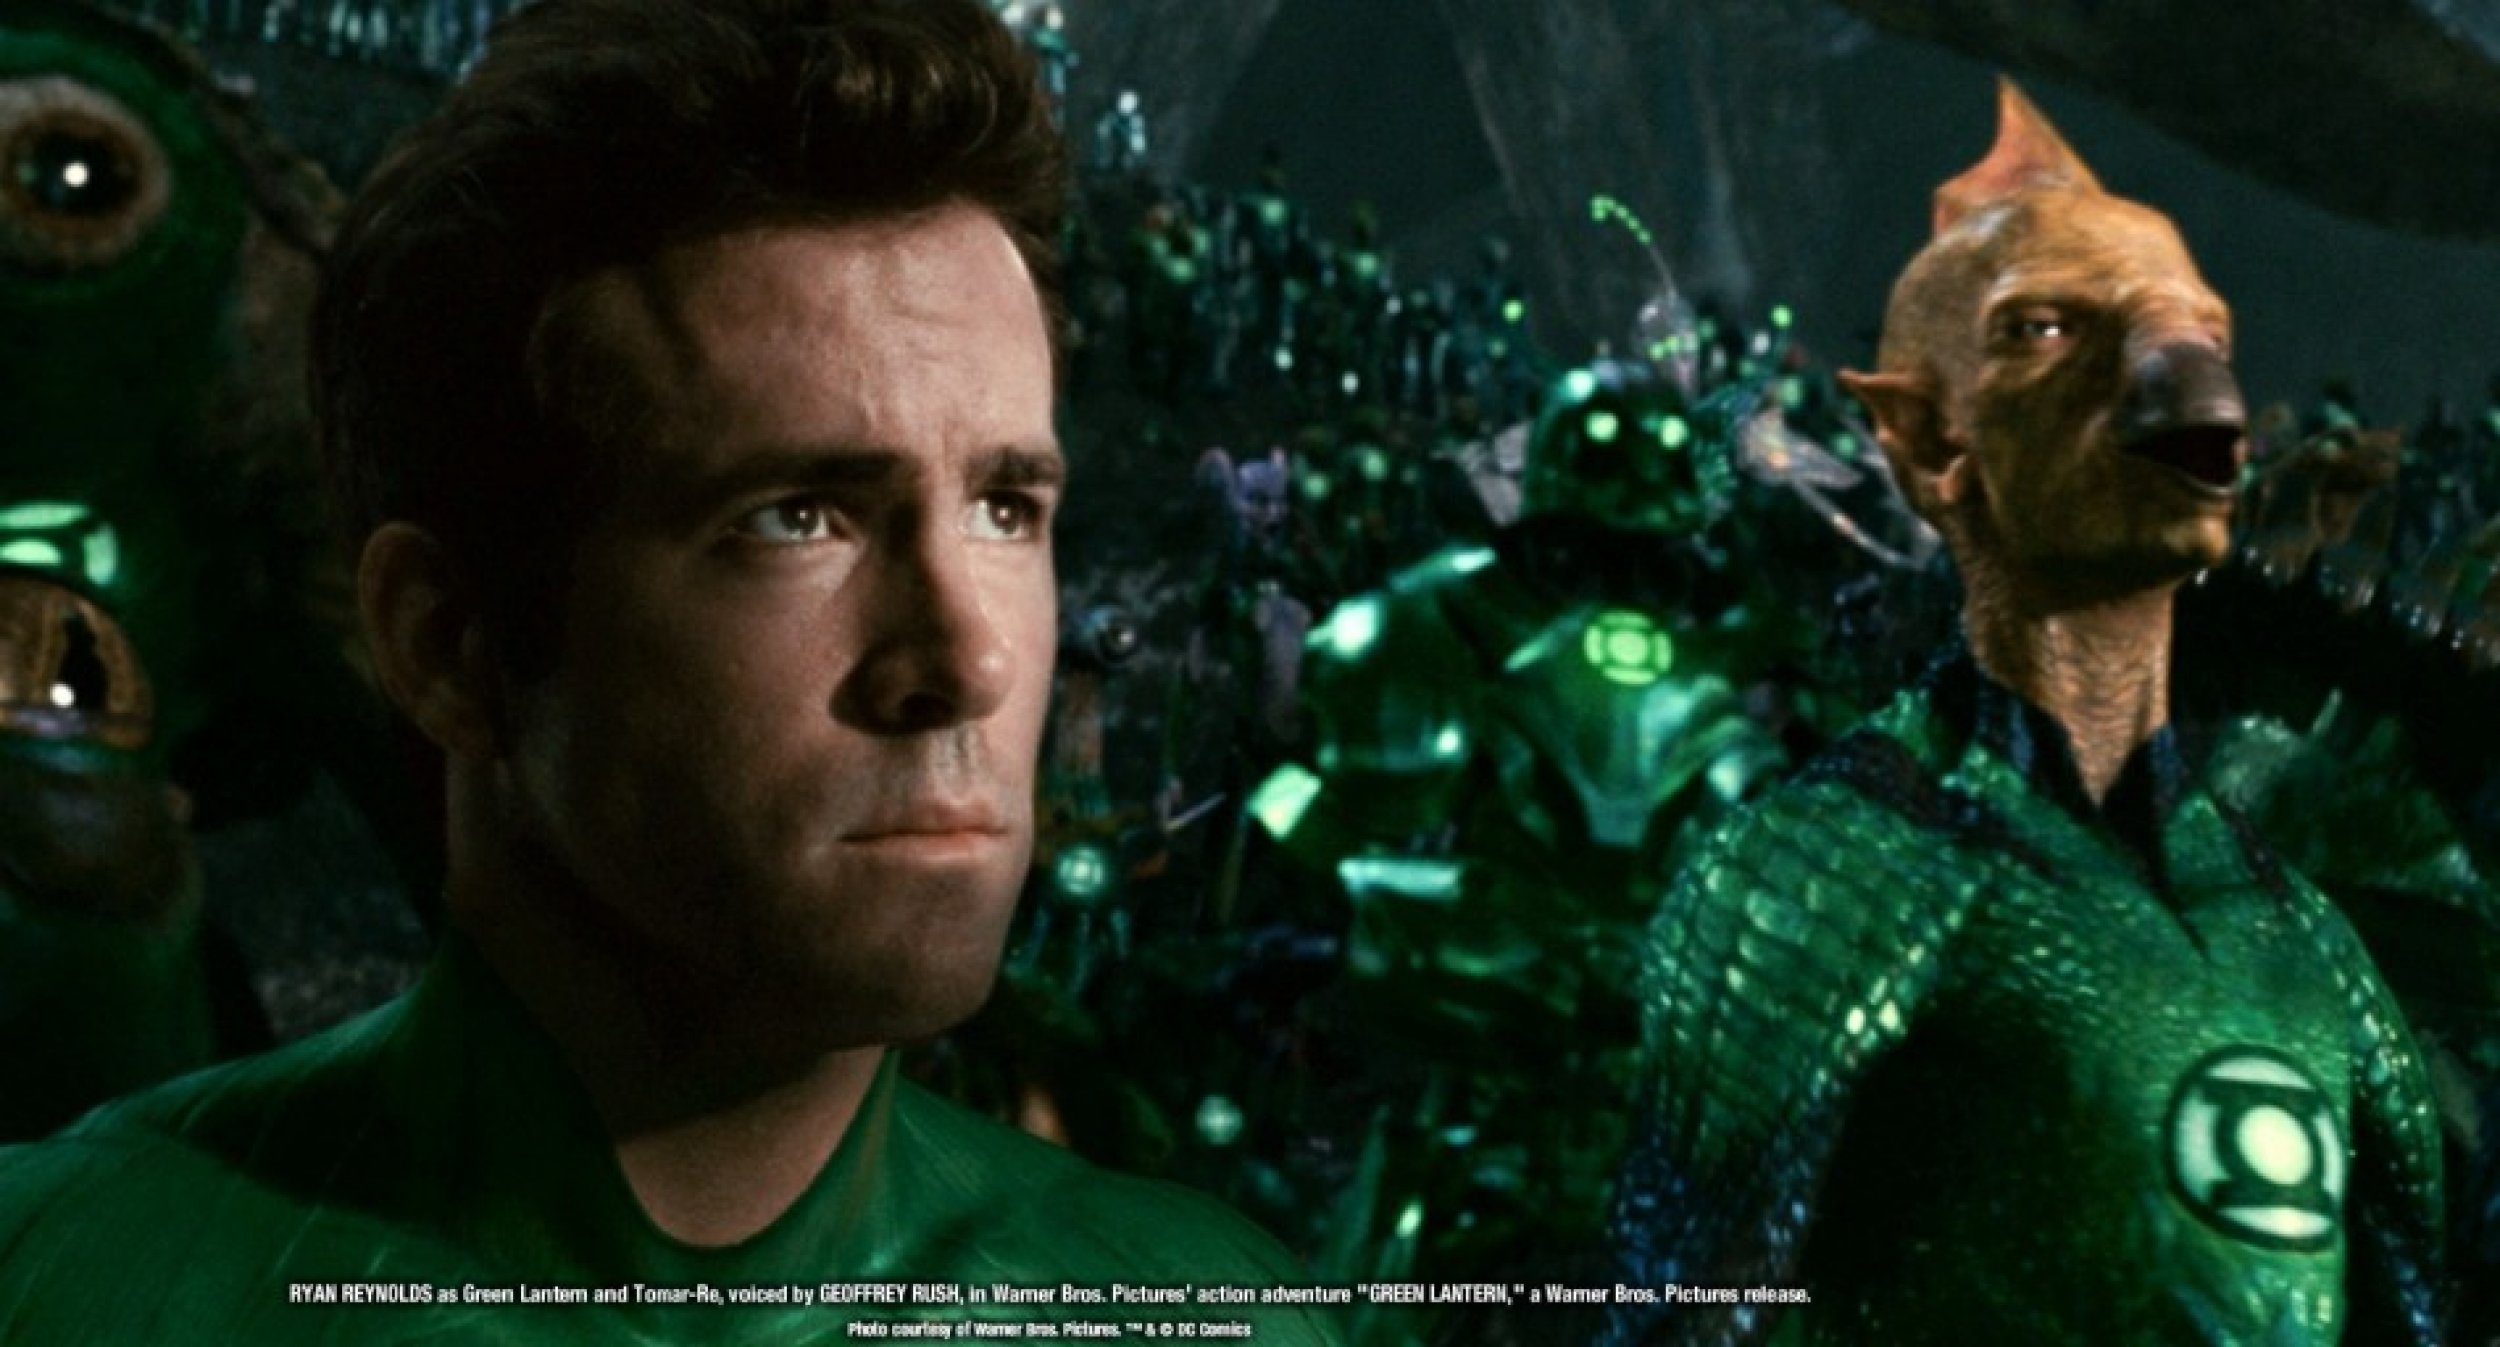 Tale of the Green Lantern